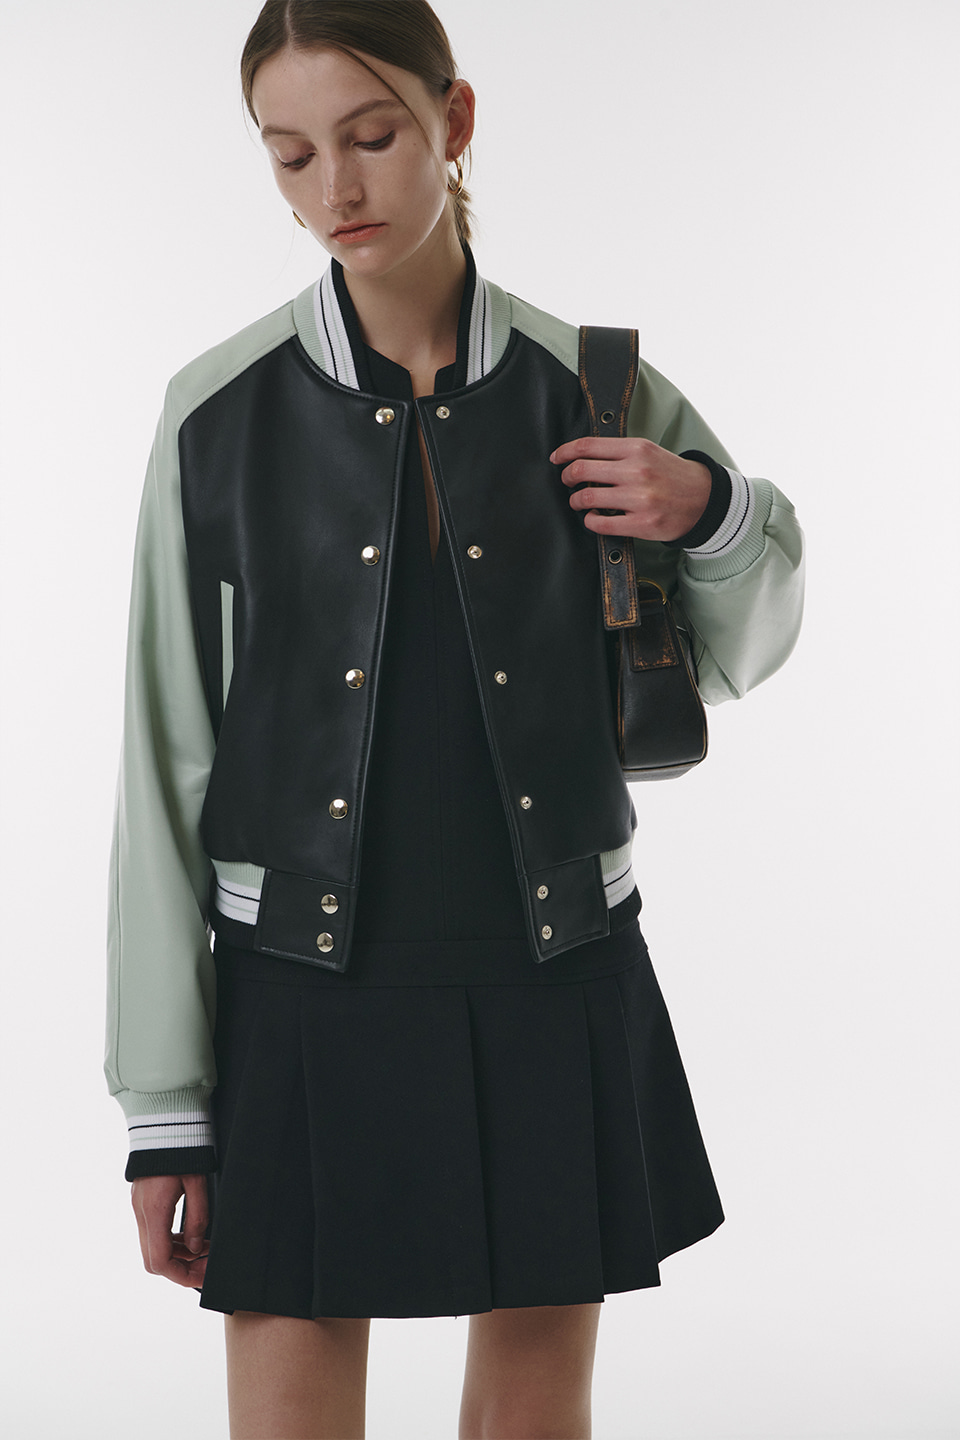 Lambskin Mixed Varsity jacket in Mint/Black